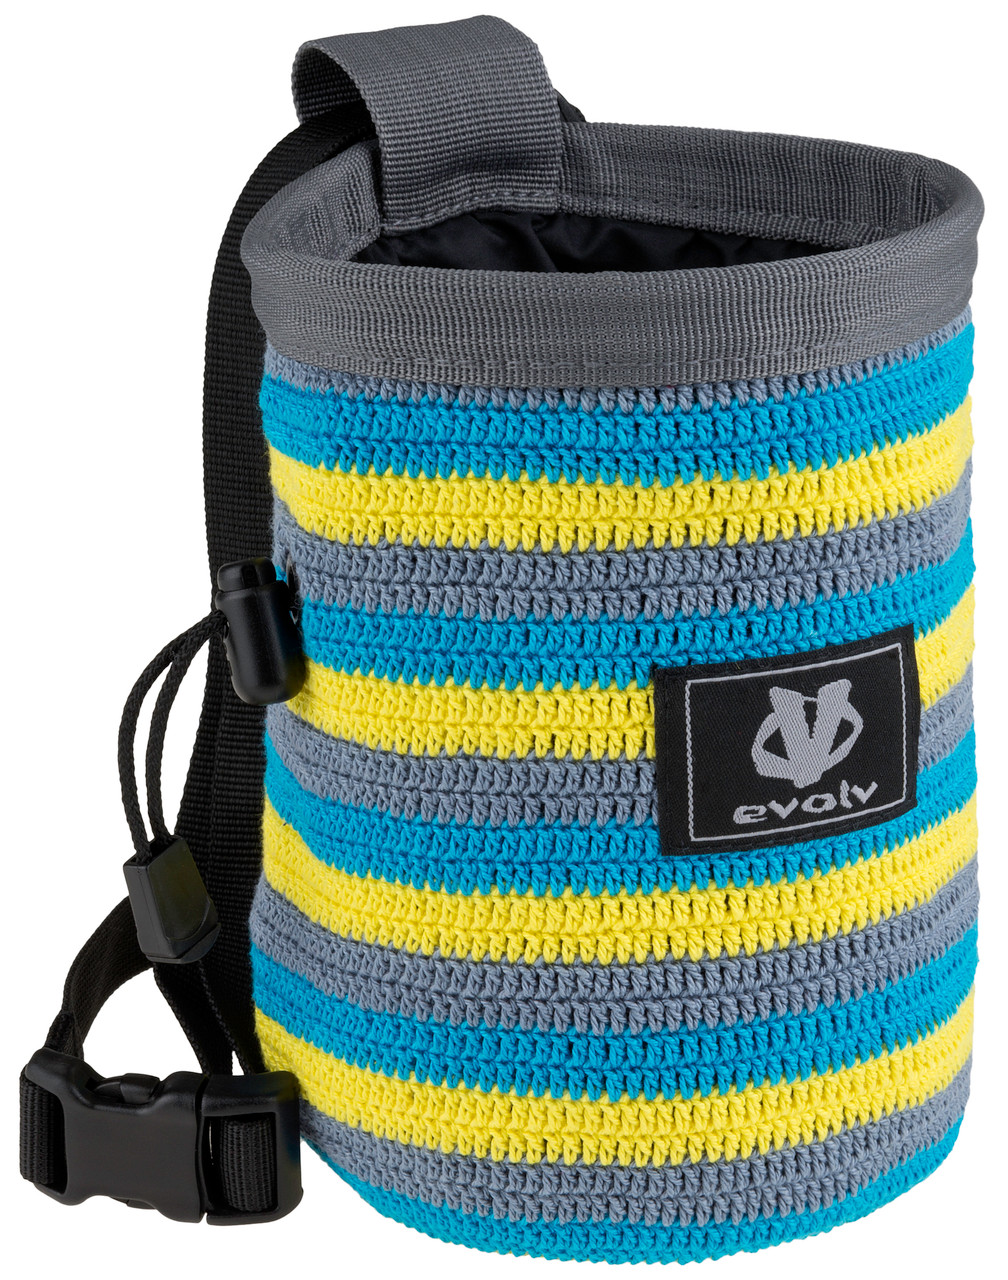 Evolv Knit Chalk Bag - Sherpa, Chalk Bags